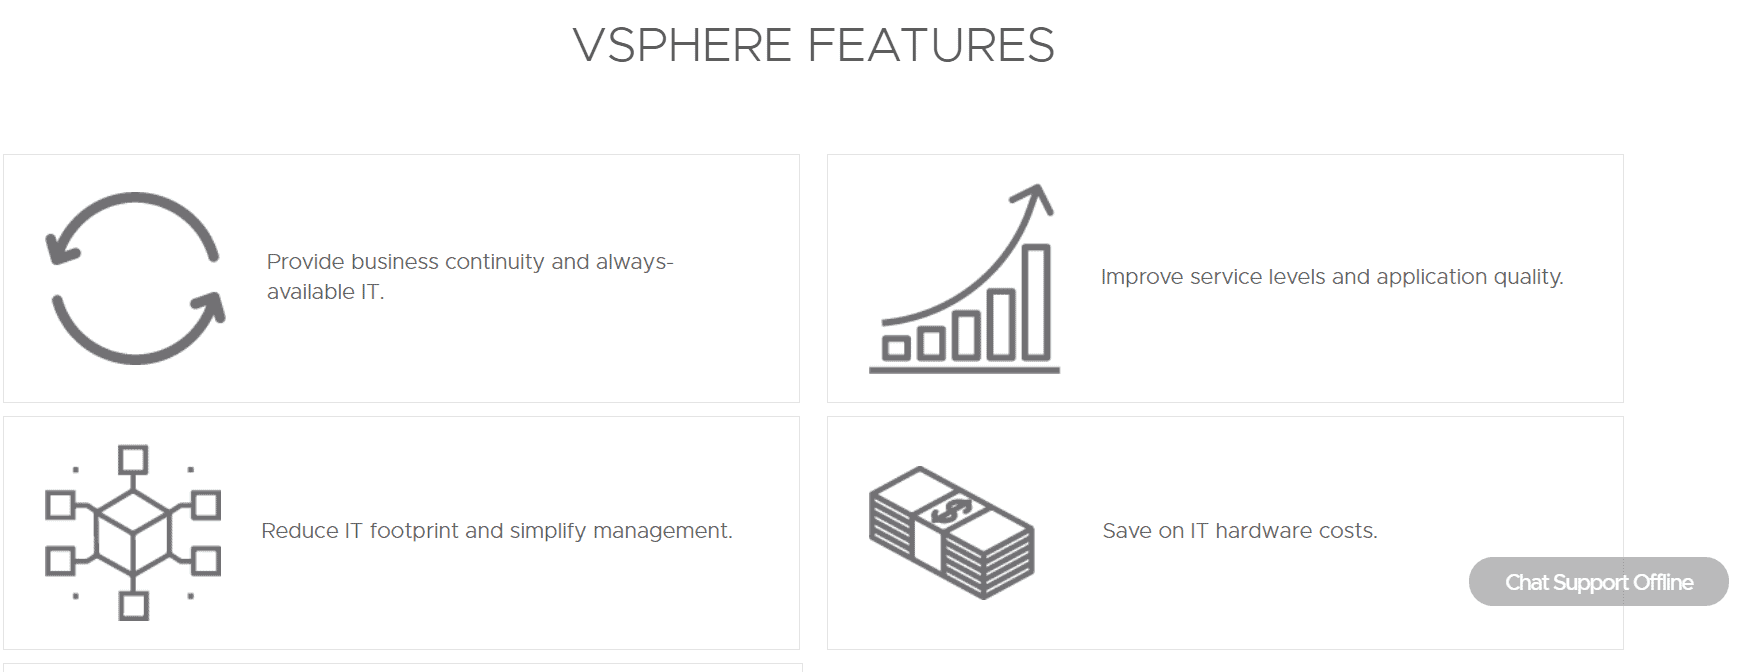 vsphere features